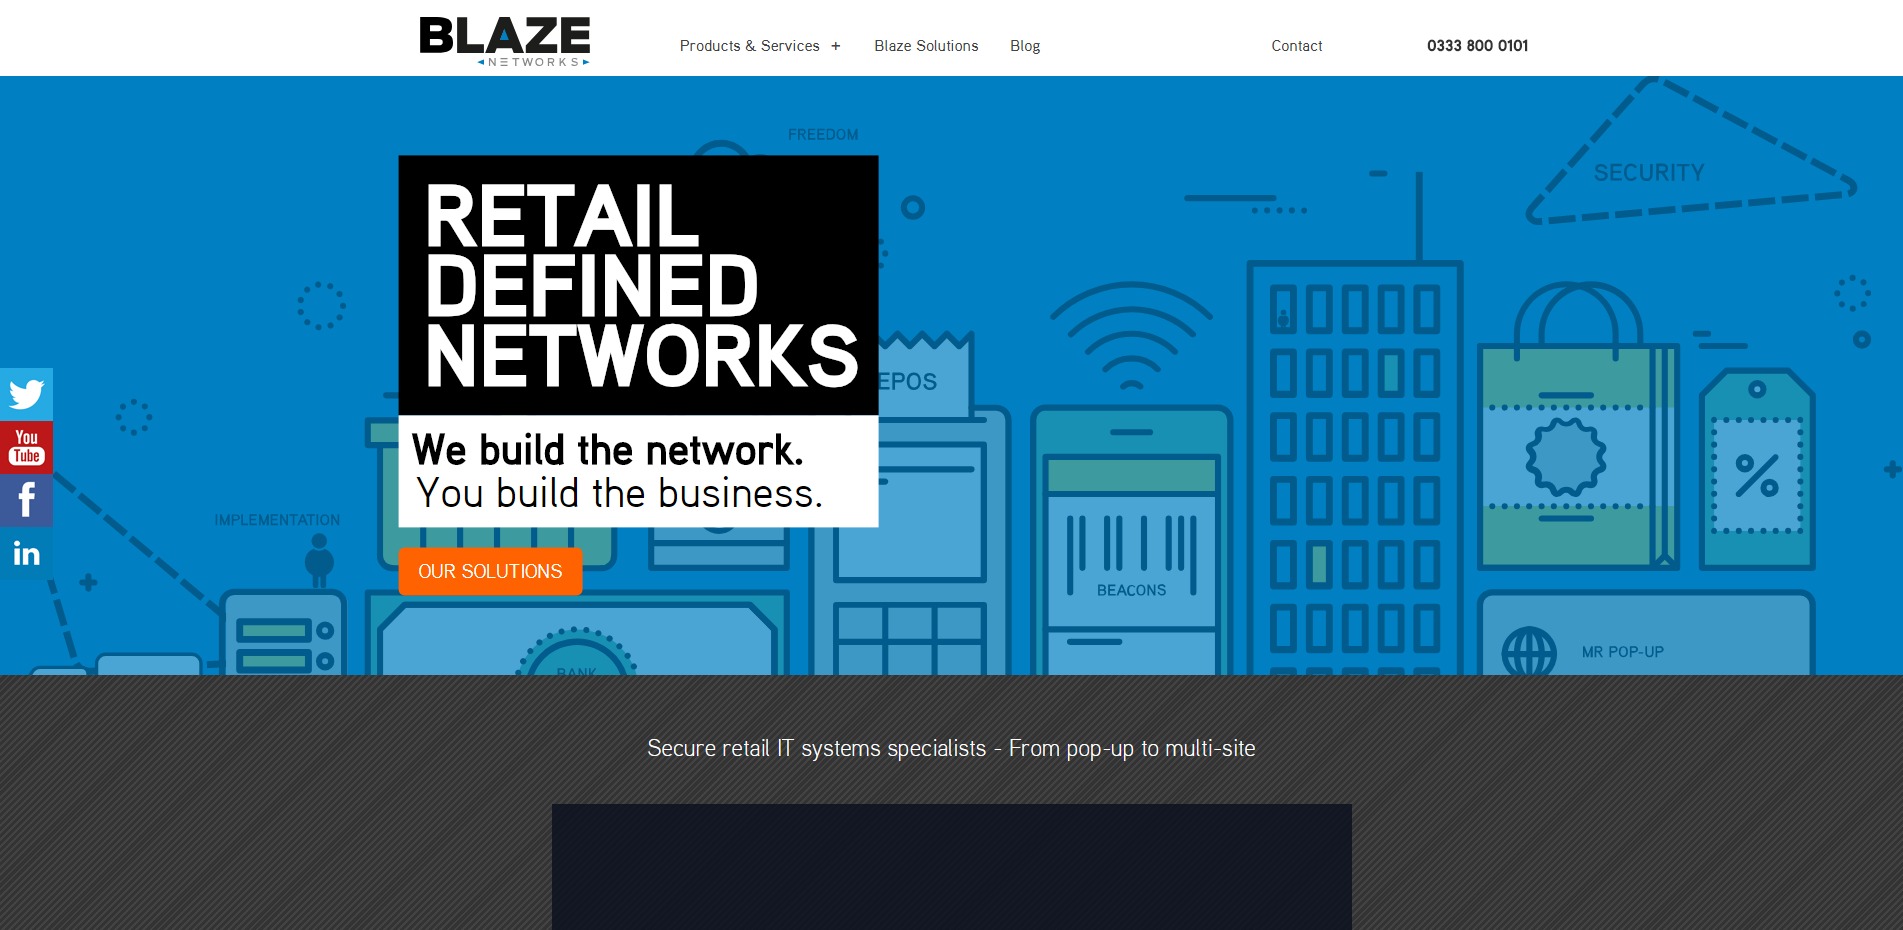 Blaze Networks Ltd.jpg